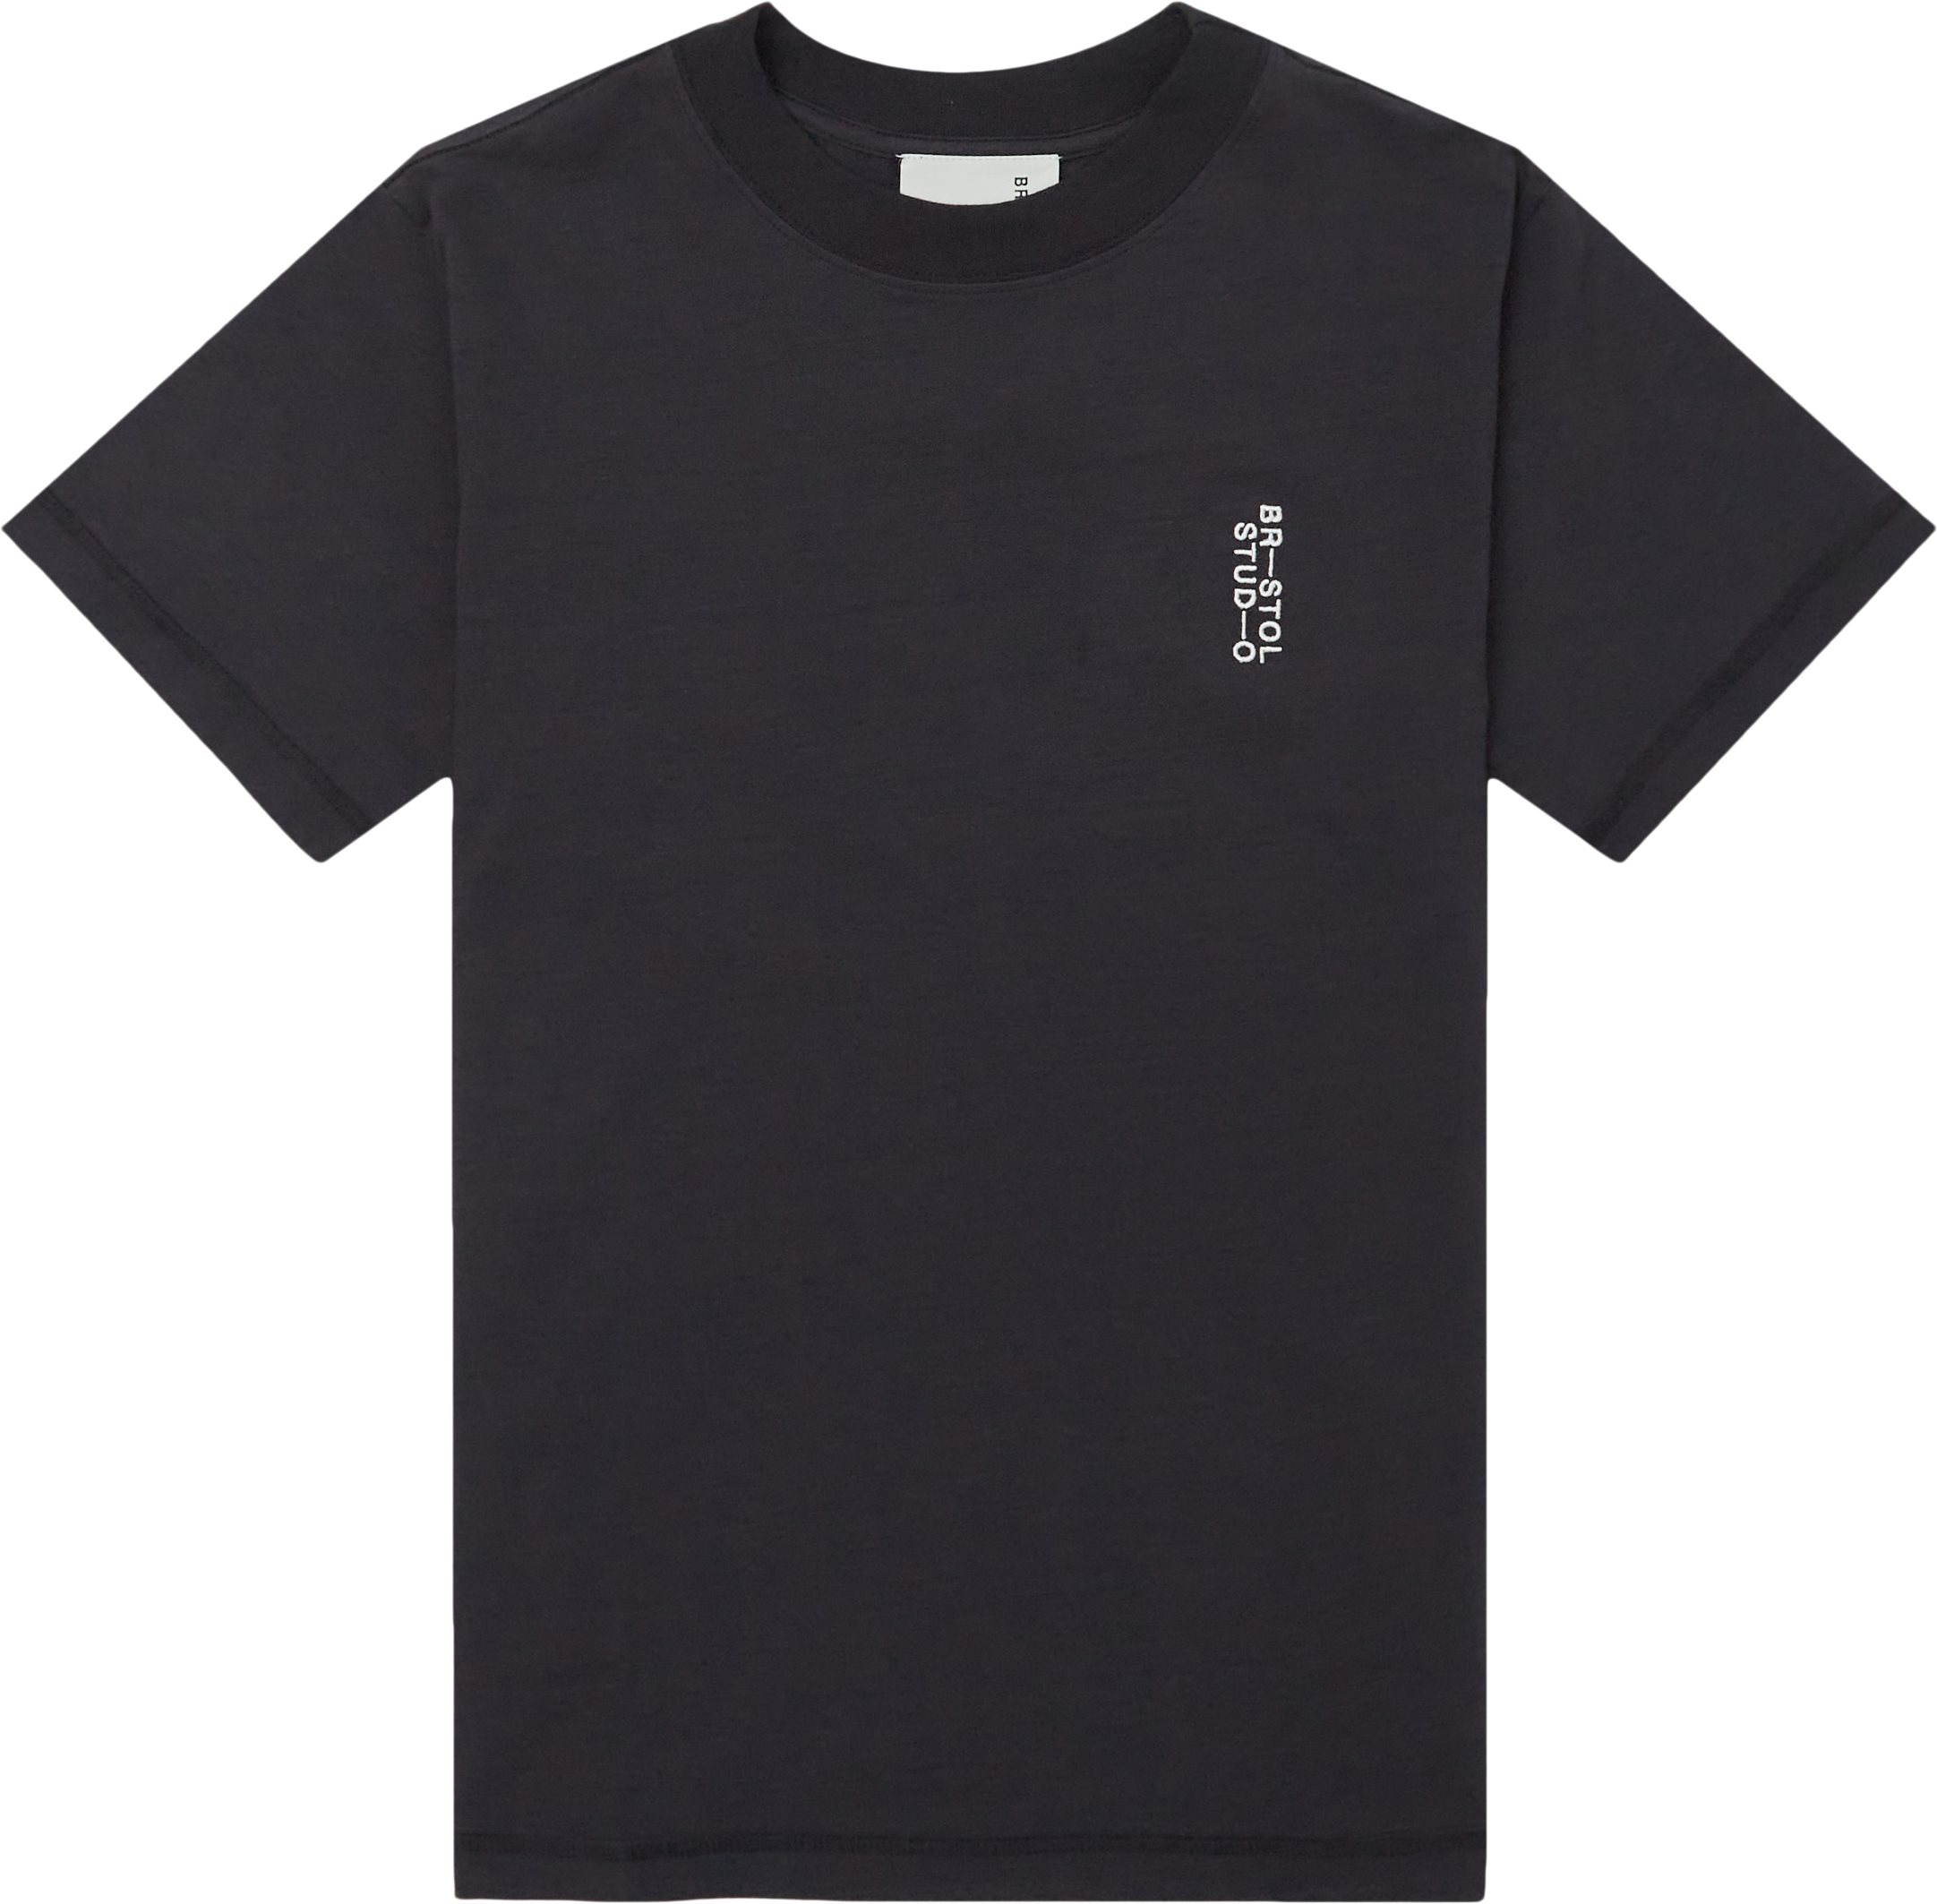 Signature Team Tee - T-shirts - Oversize fit - Sort